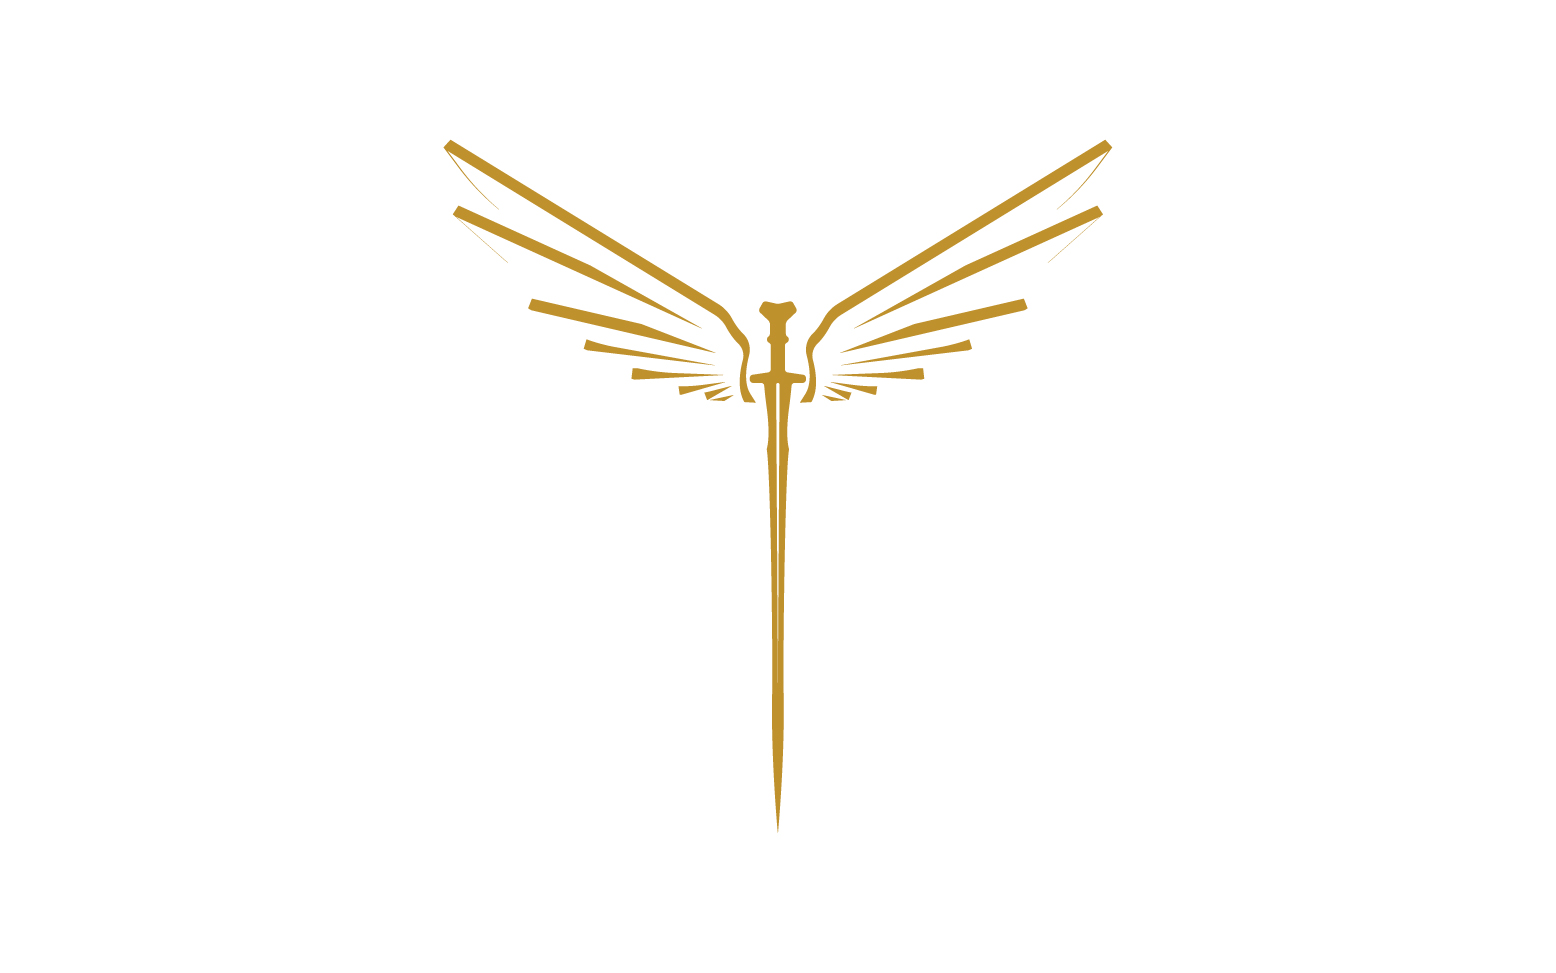 Sword with Wings. Golden Sword Symbol v44